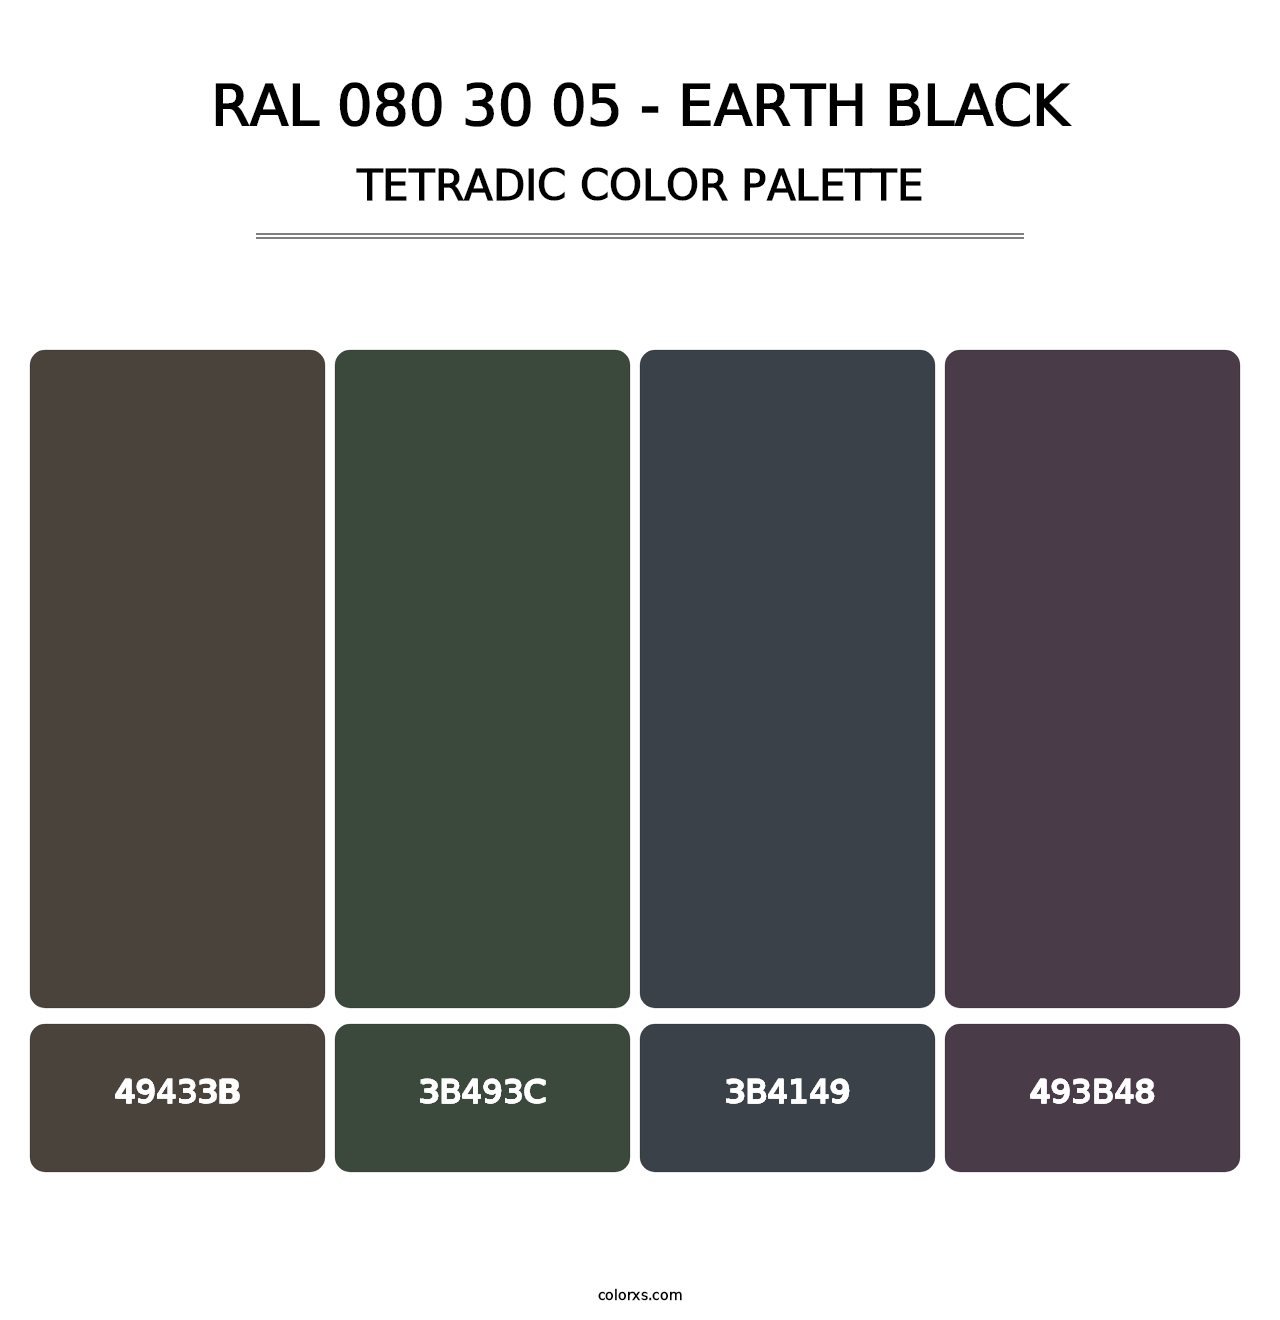 RAL 080 30 05 - Earth Black - Tetradic Color Palette